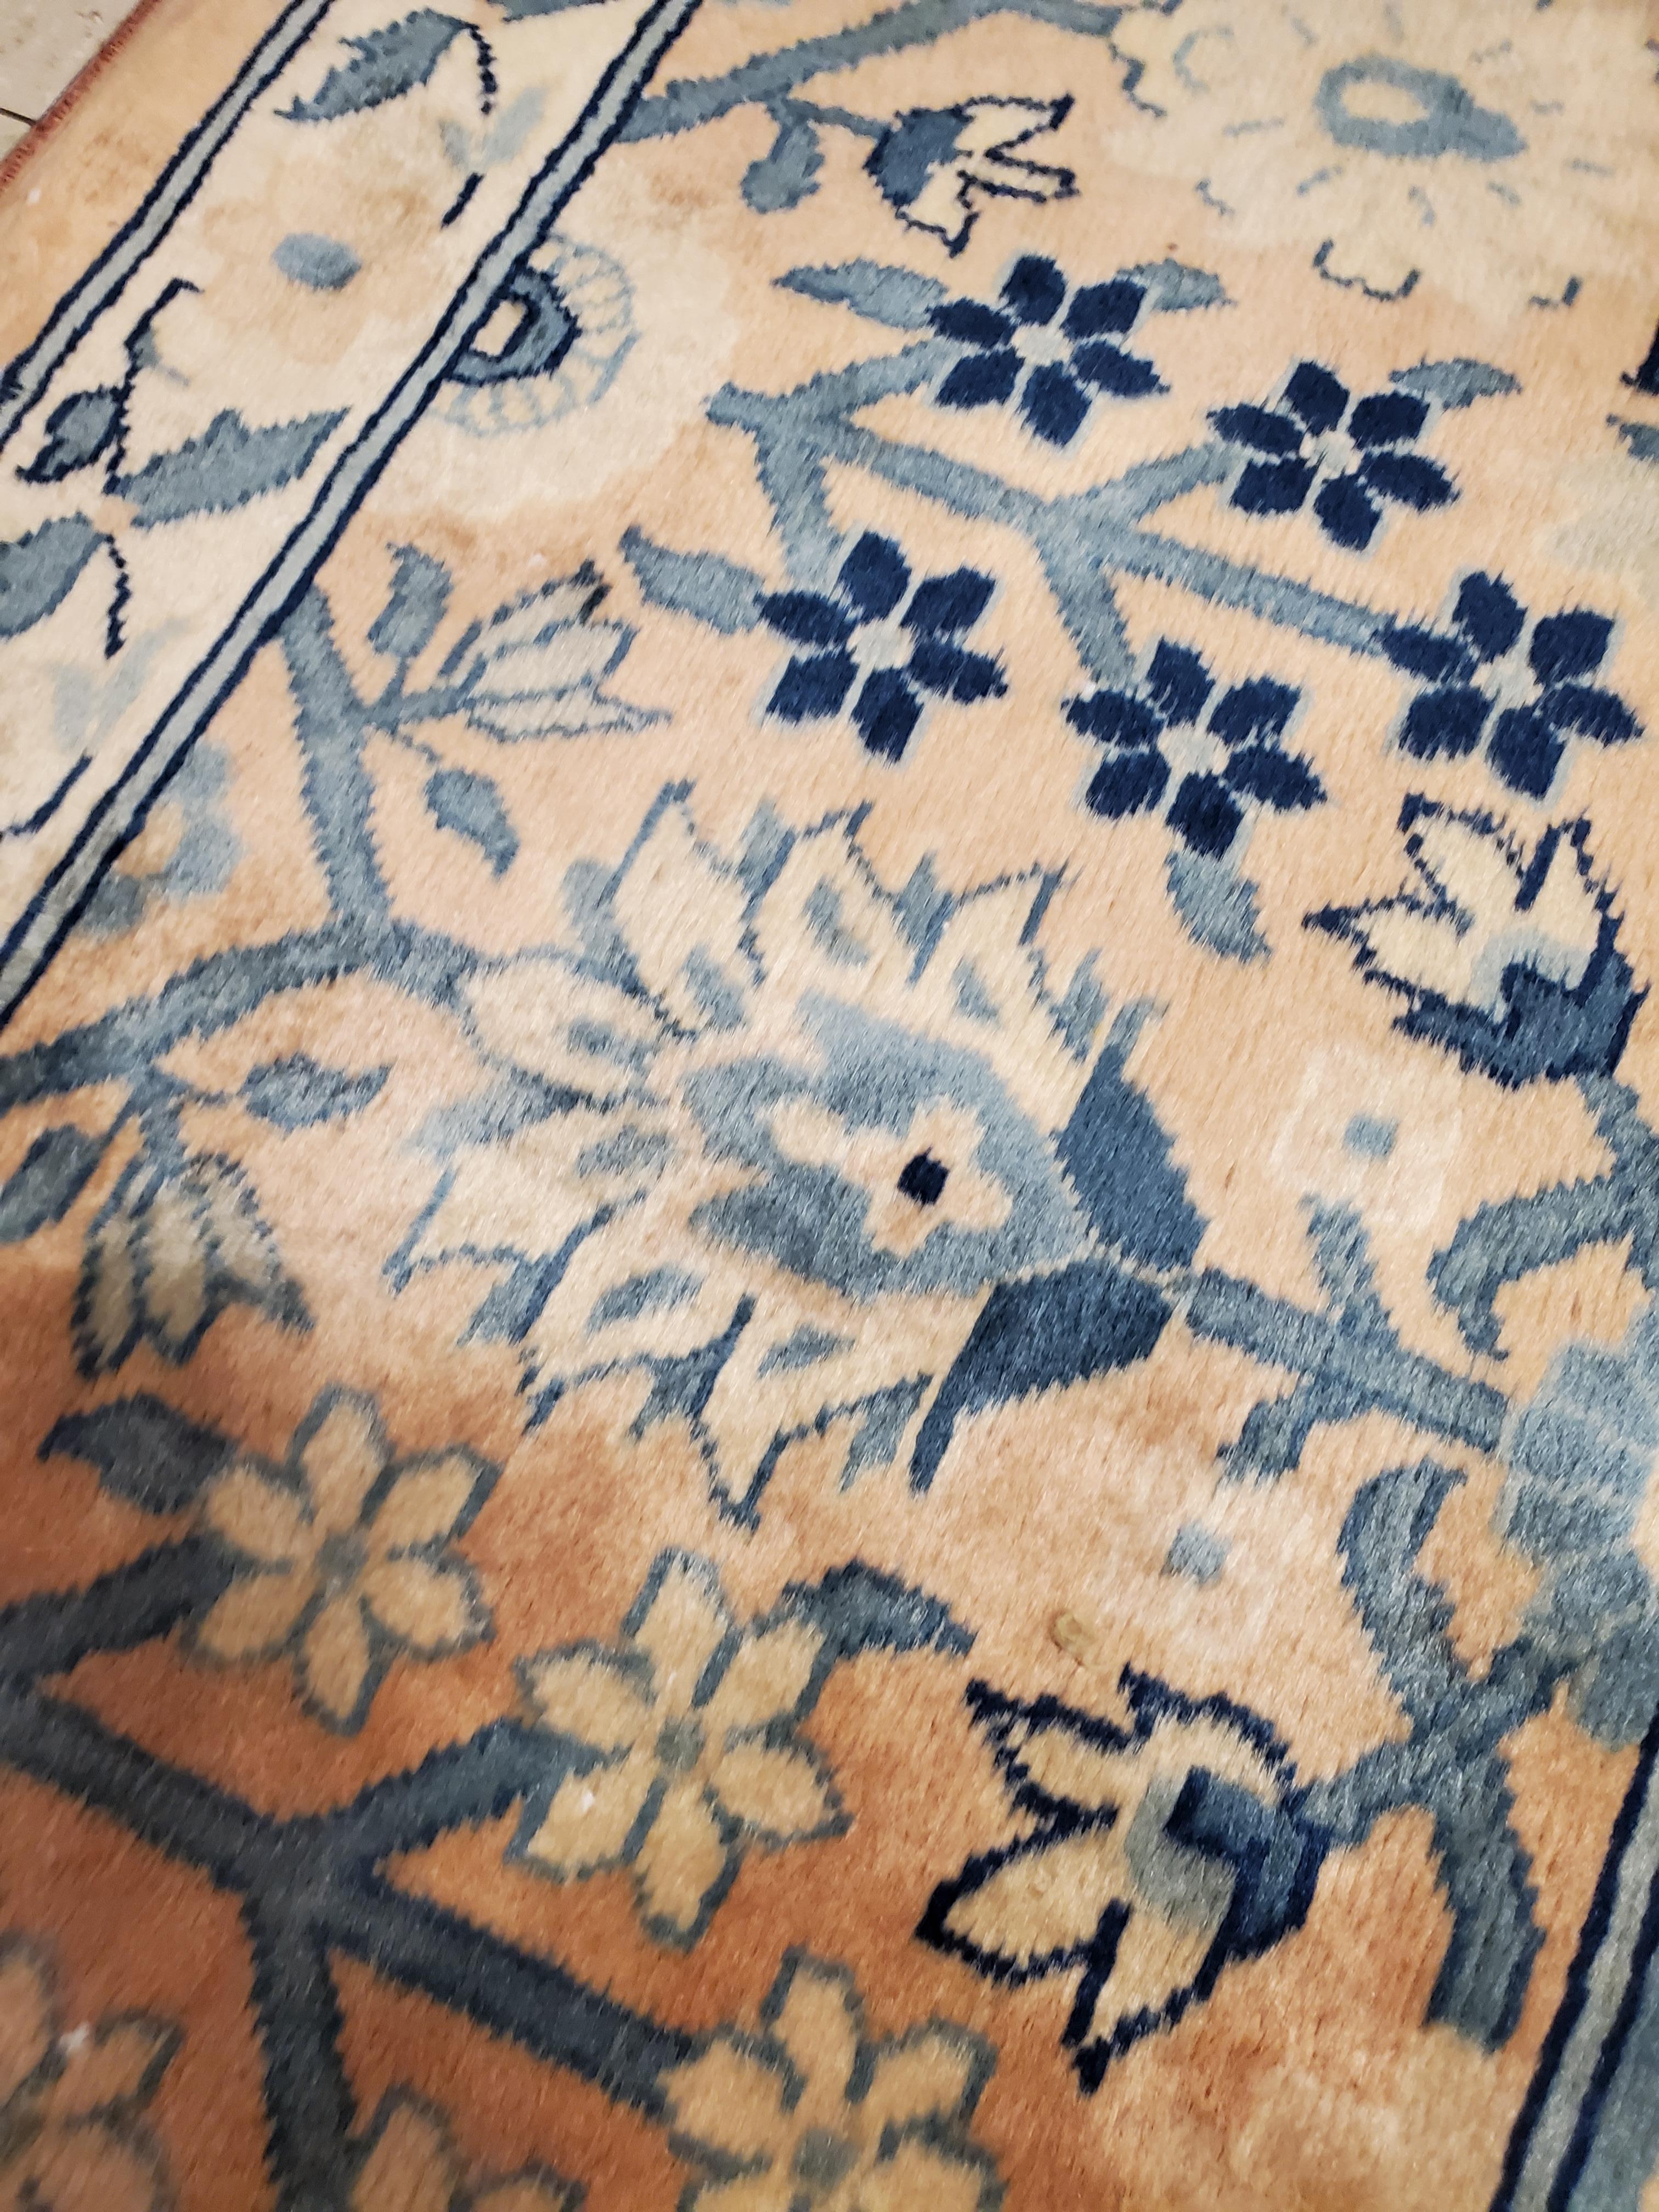 Antique Indian Amritsar Handmade Oriental Rug, Blue, Taupe Creams Allover Design For Sale 1